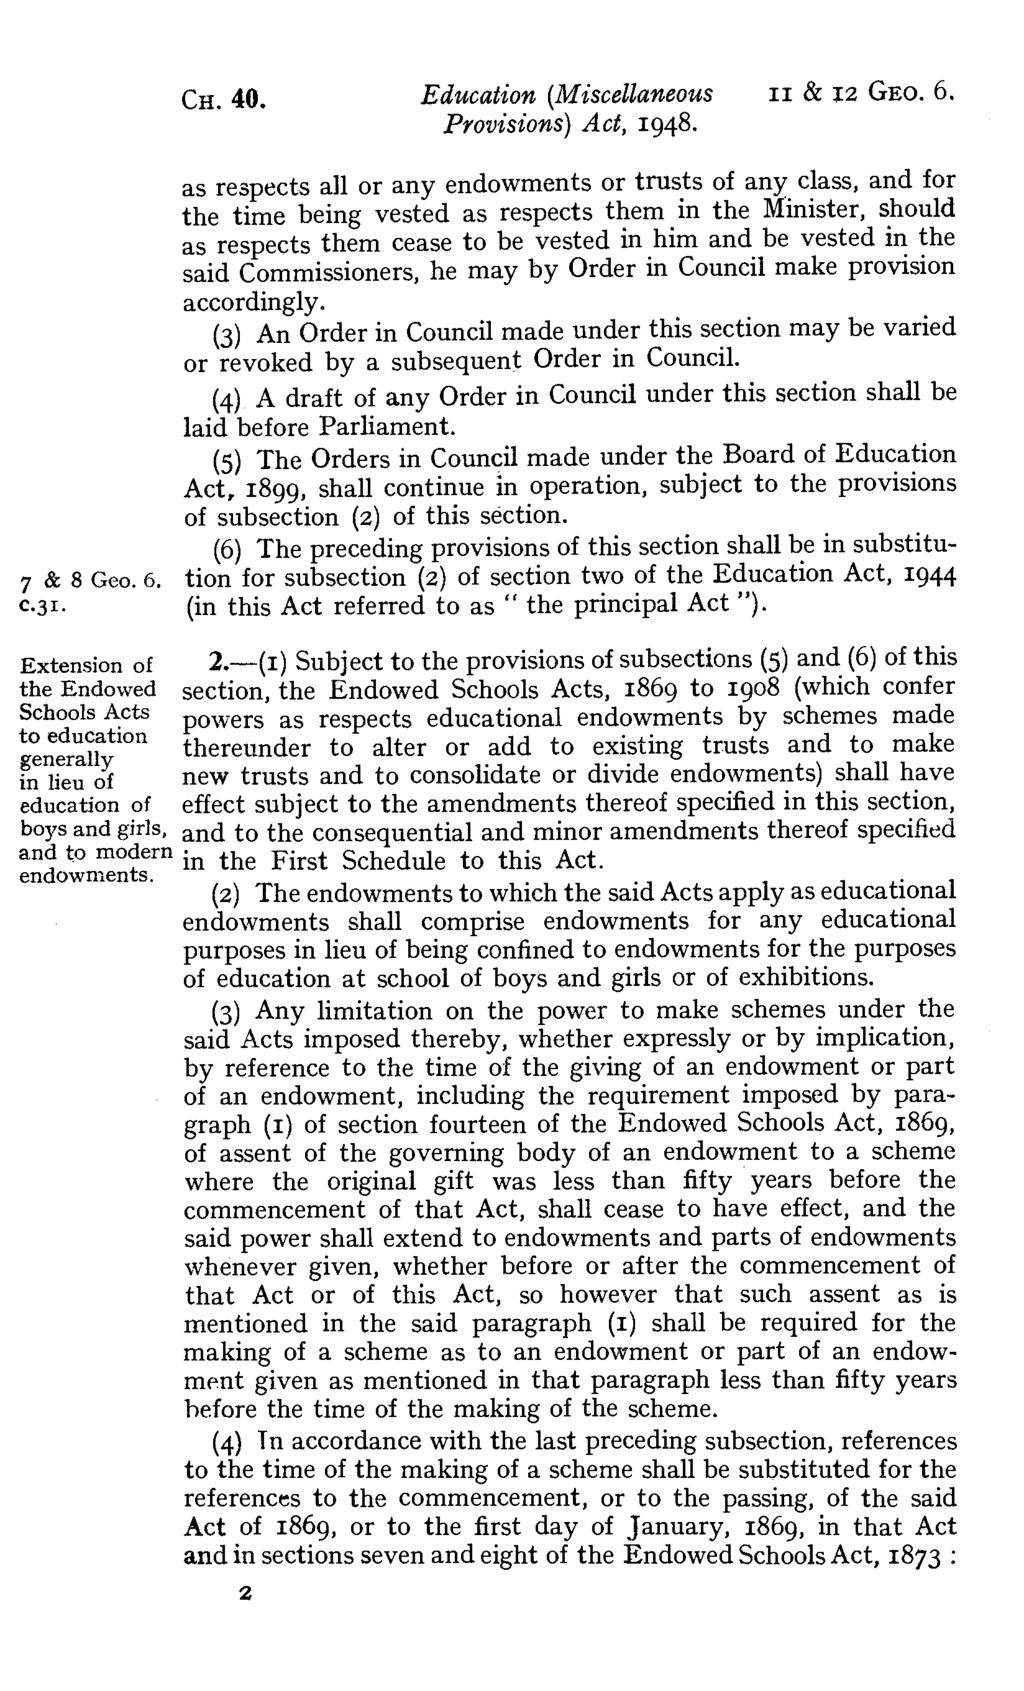 CH. 40. Education (Miscellaneous ii & 12 GEO. 6.